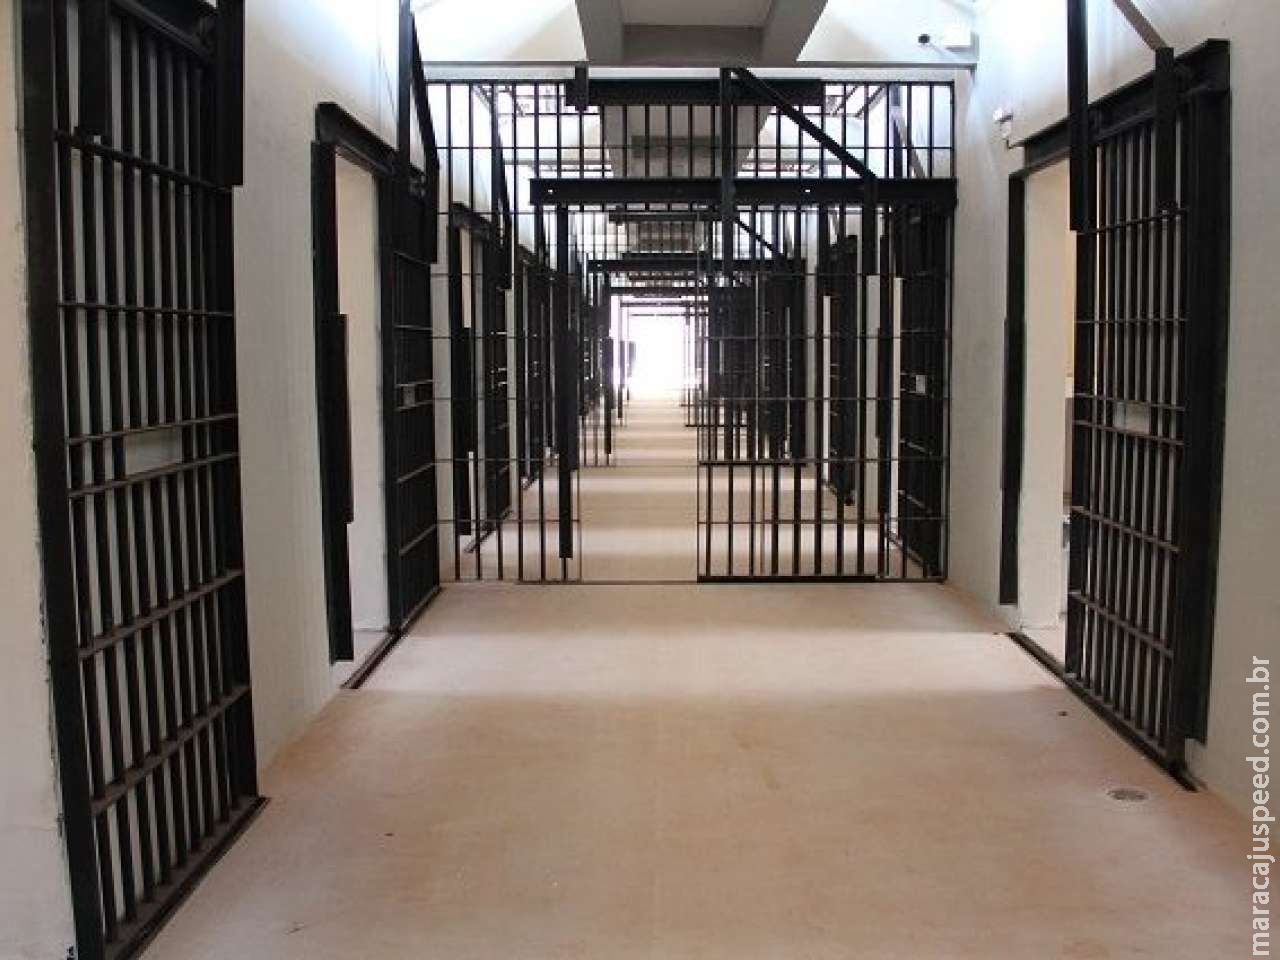  Com visitas suspensas, sistema prisional de MS confirmou 5 mil casos de Covid-19 